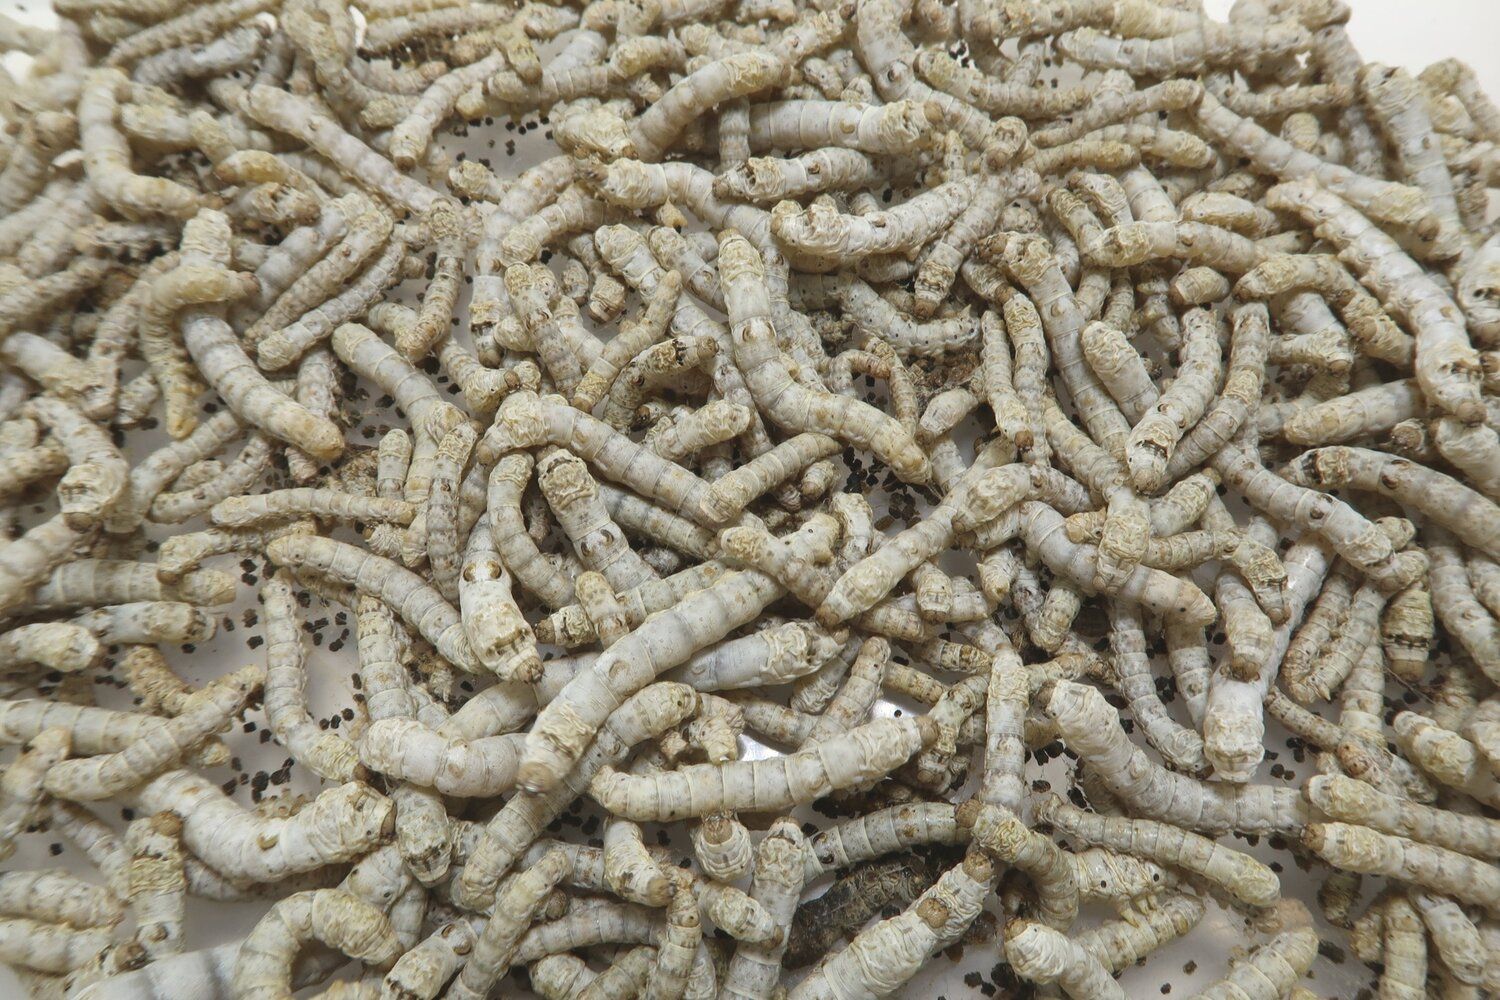 Buy silkworms online for reptiles